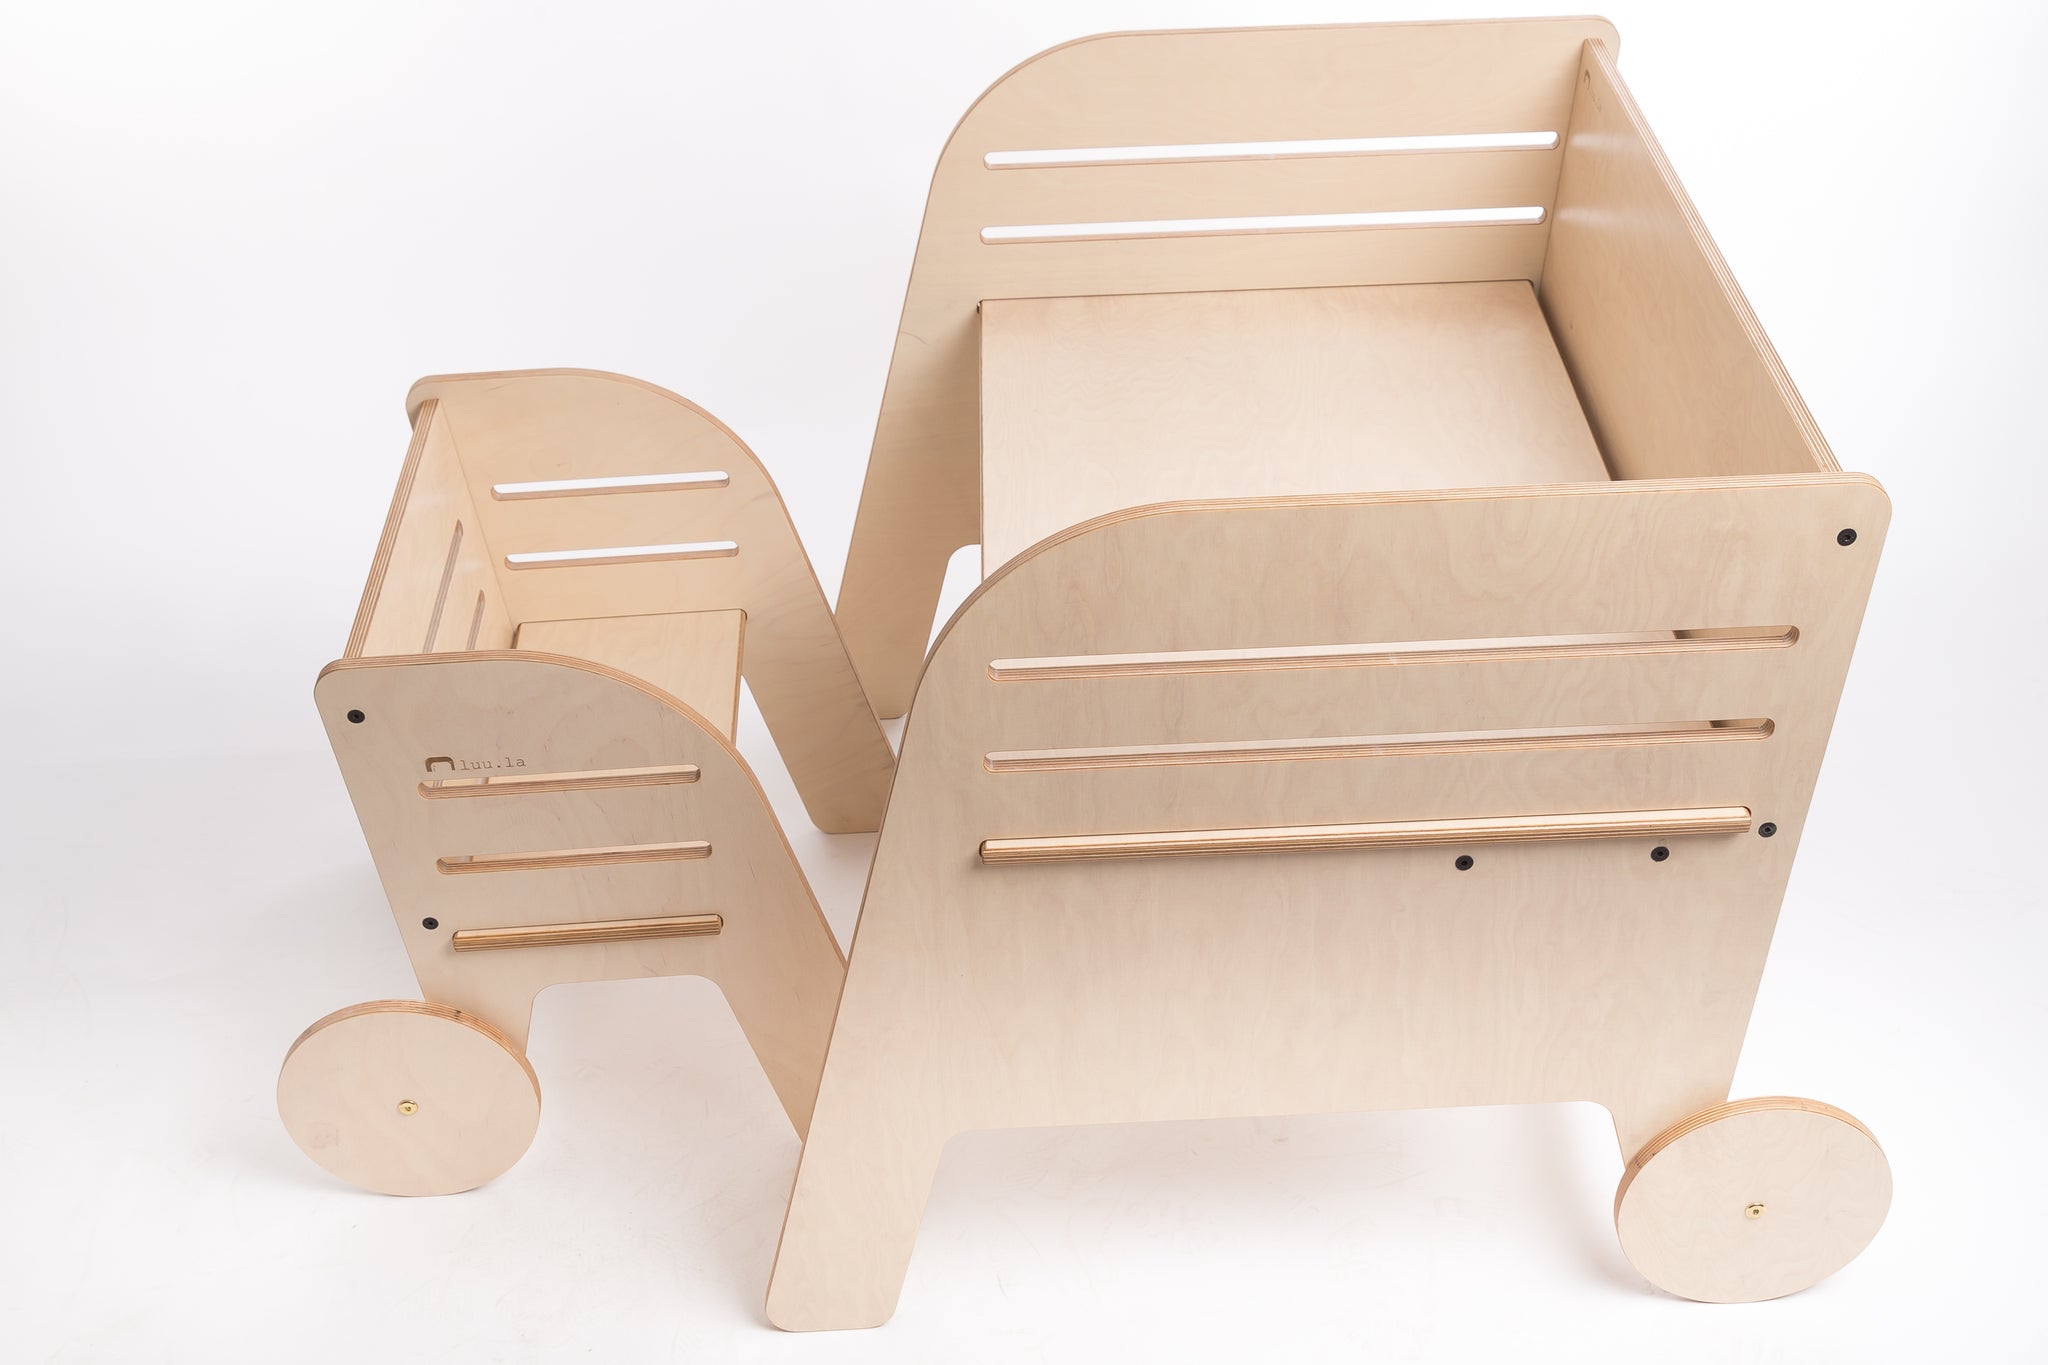 Petite Table multi-fonctionnelle et Chaise Montessori – Monti Family